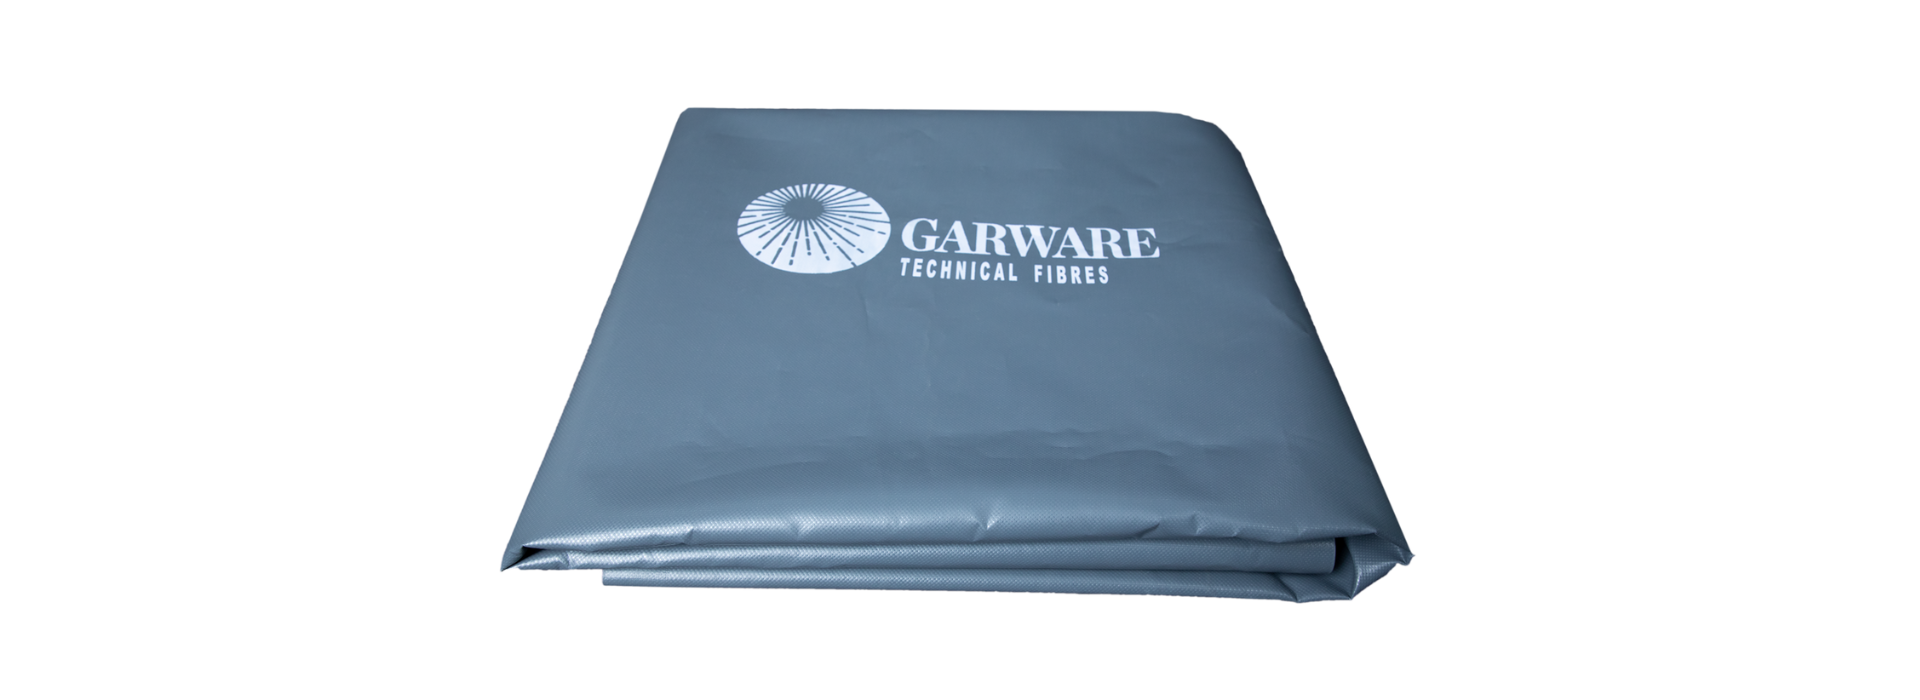 Pandal Fabrics of Garware Technical Fibres